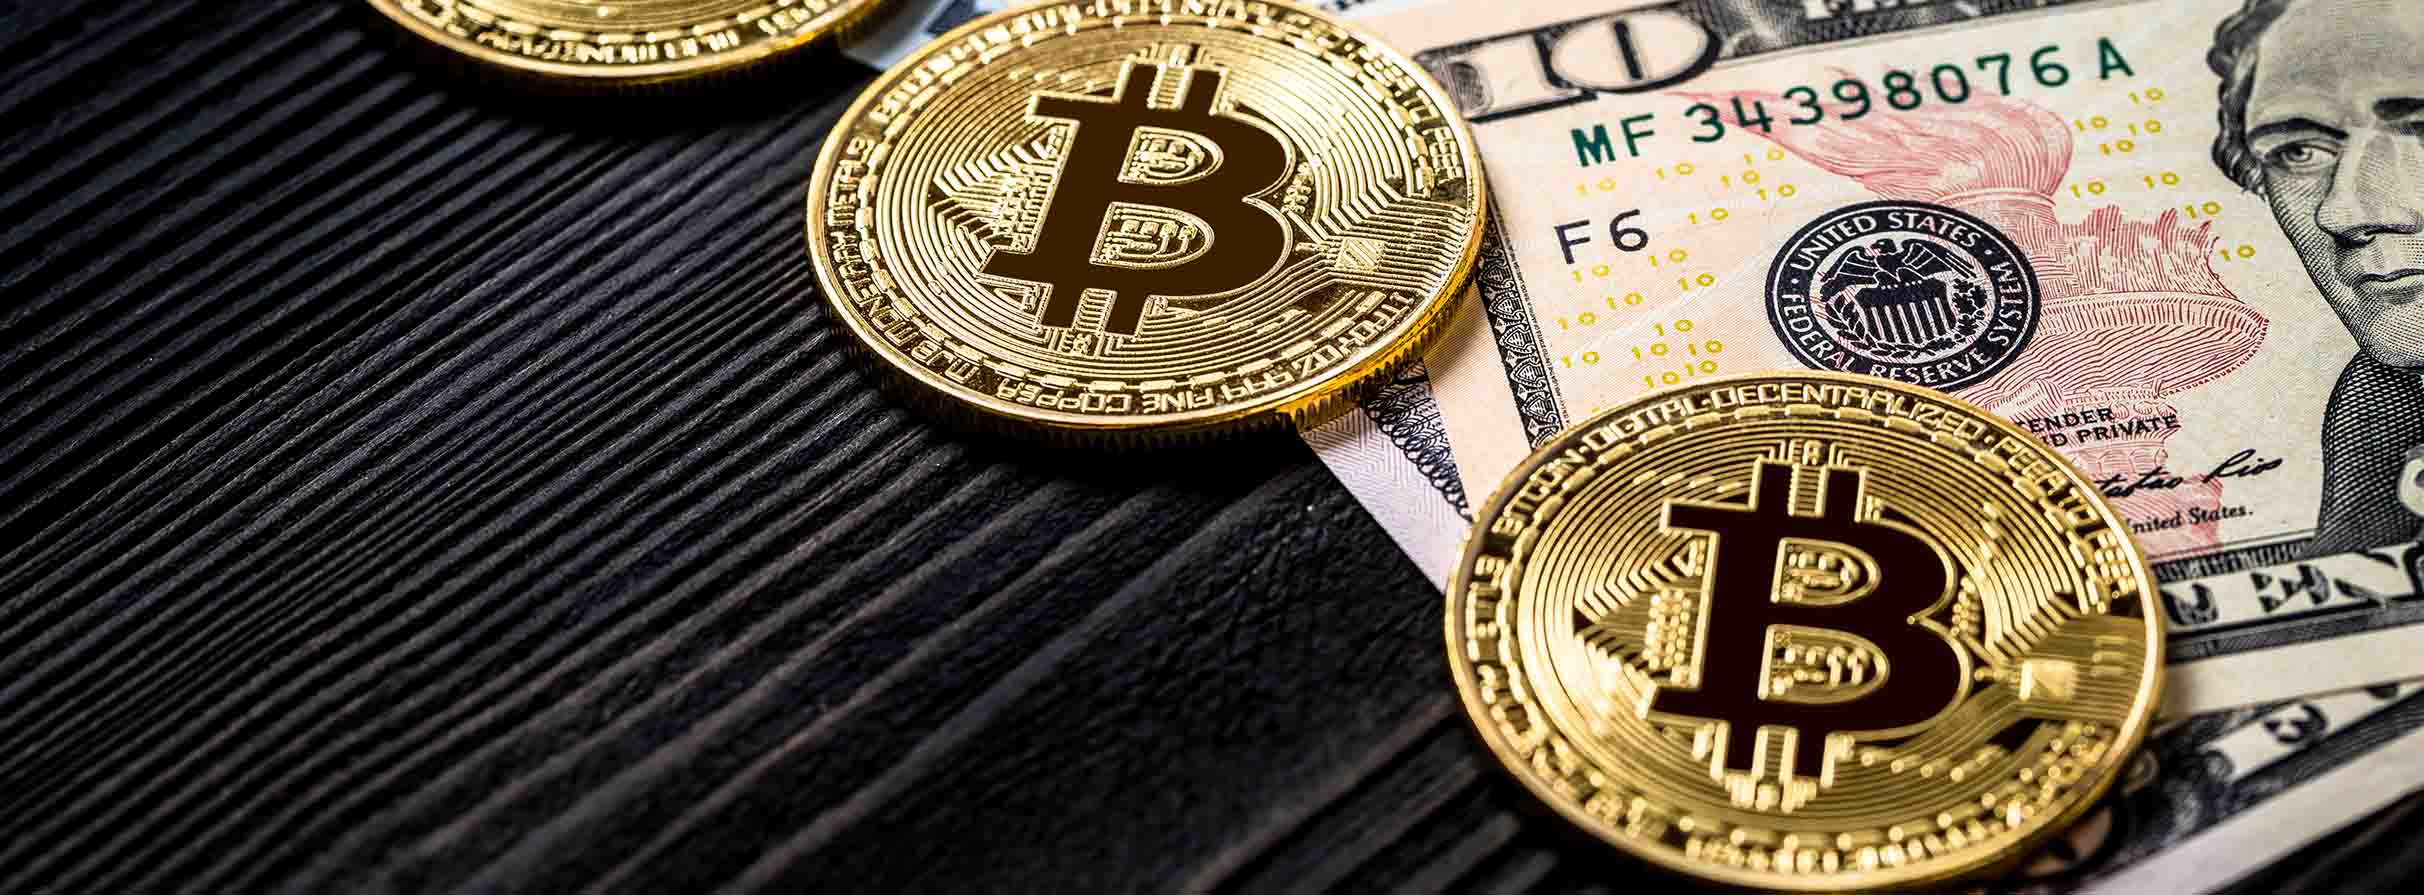 Entenda de uma vez: Bitcoin é investimento!